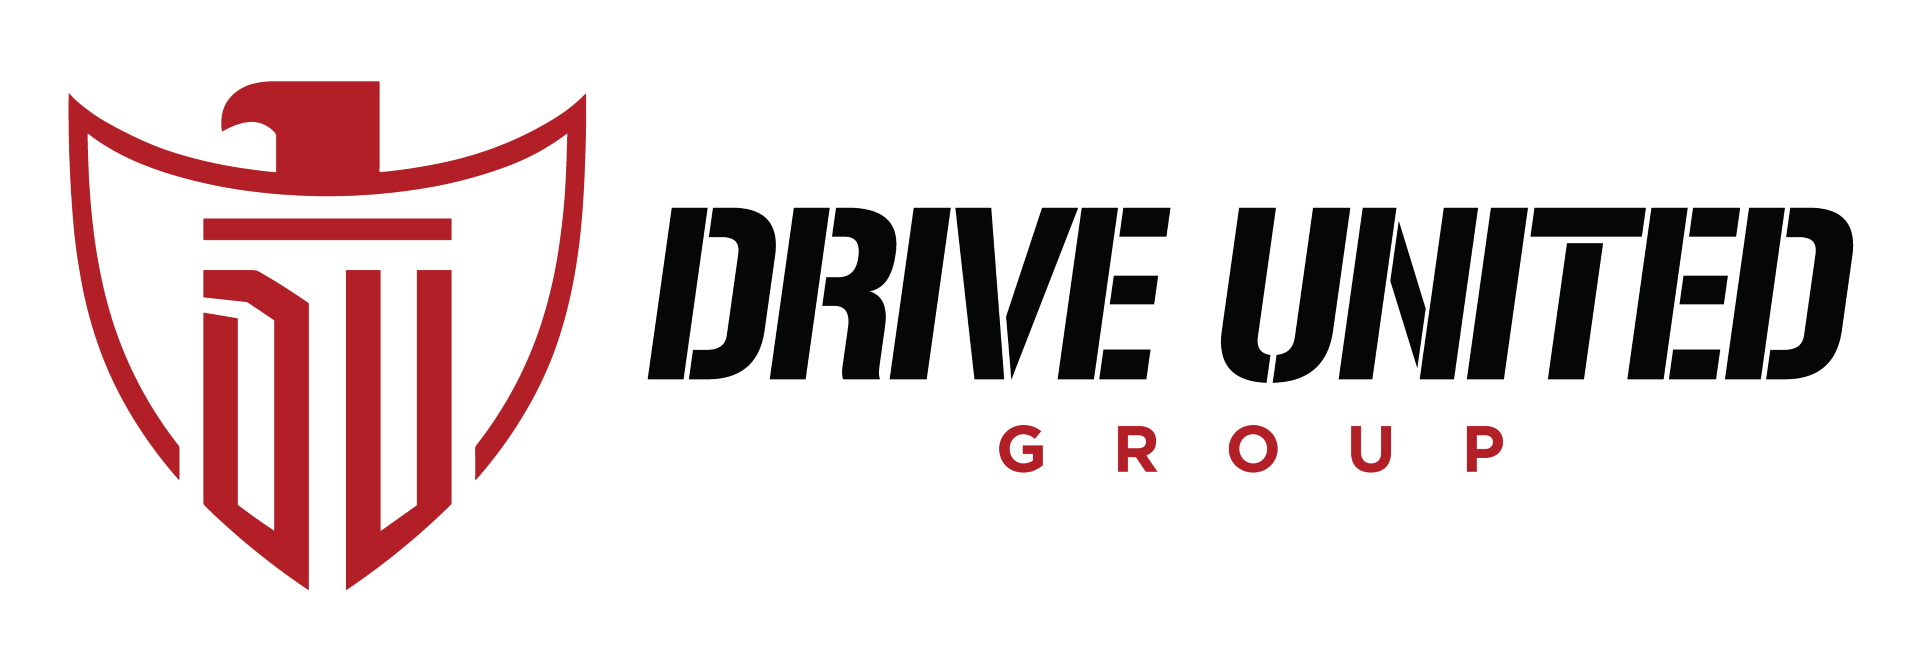 Drive United Group